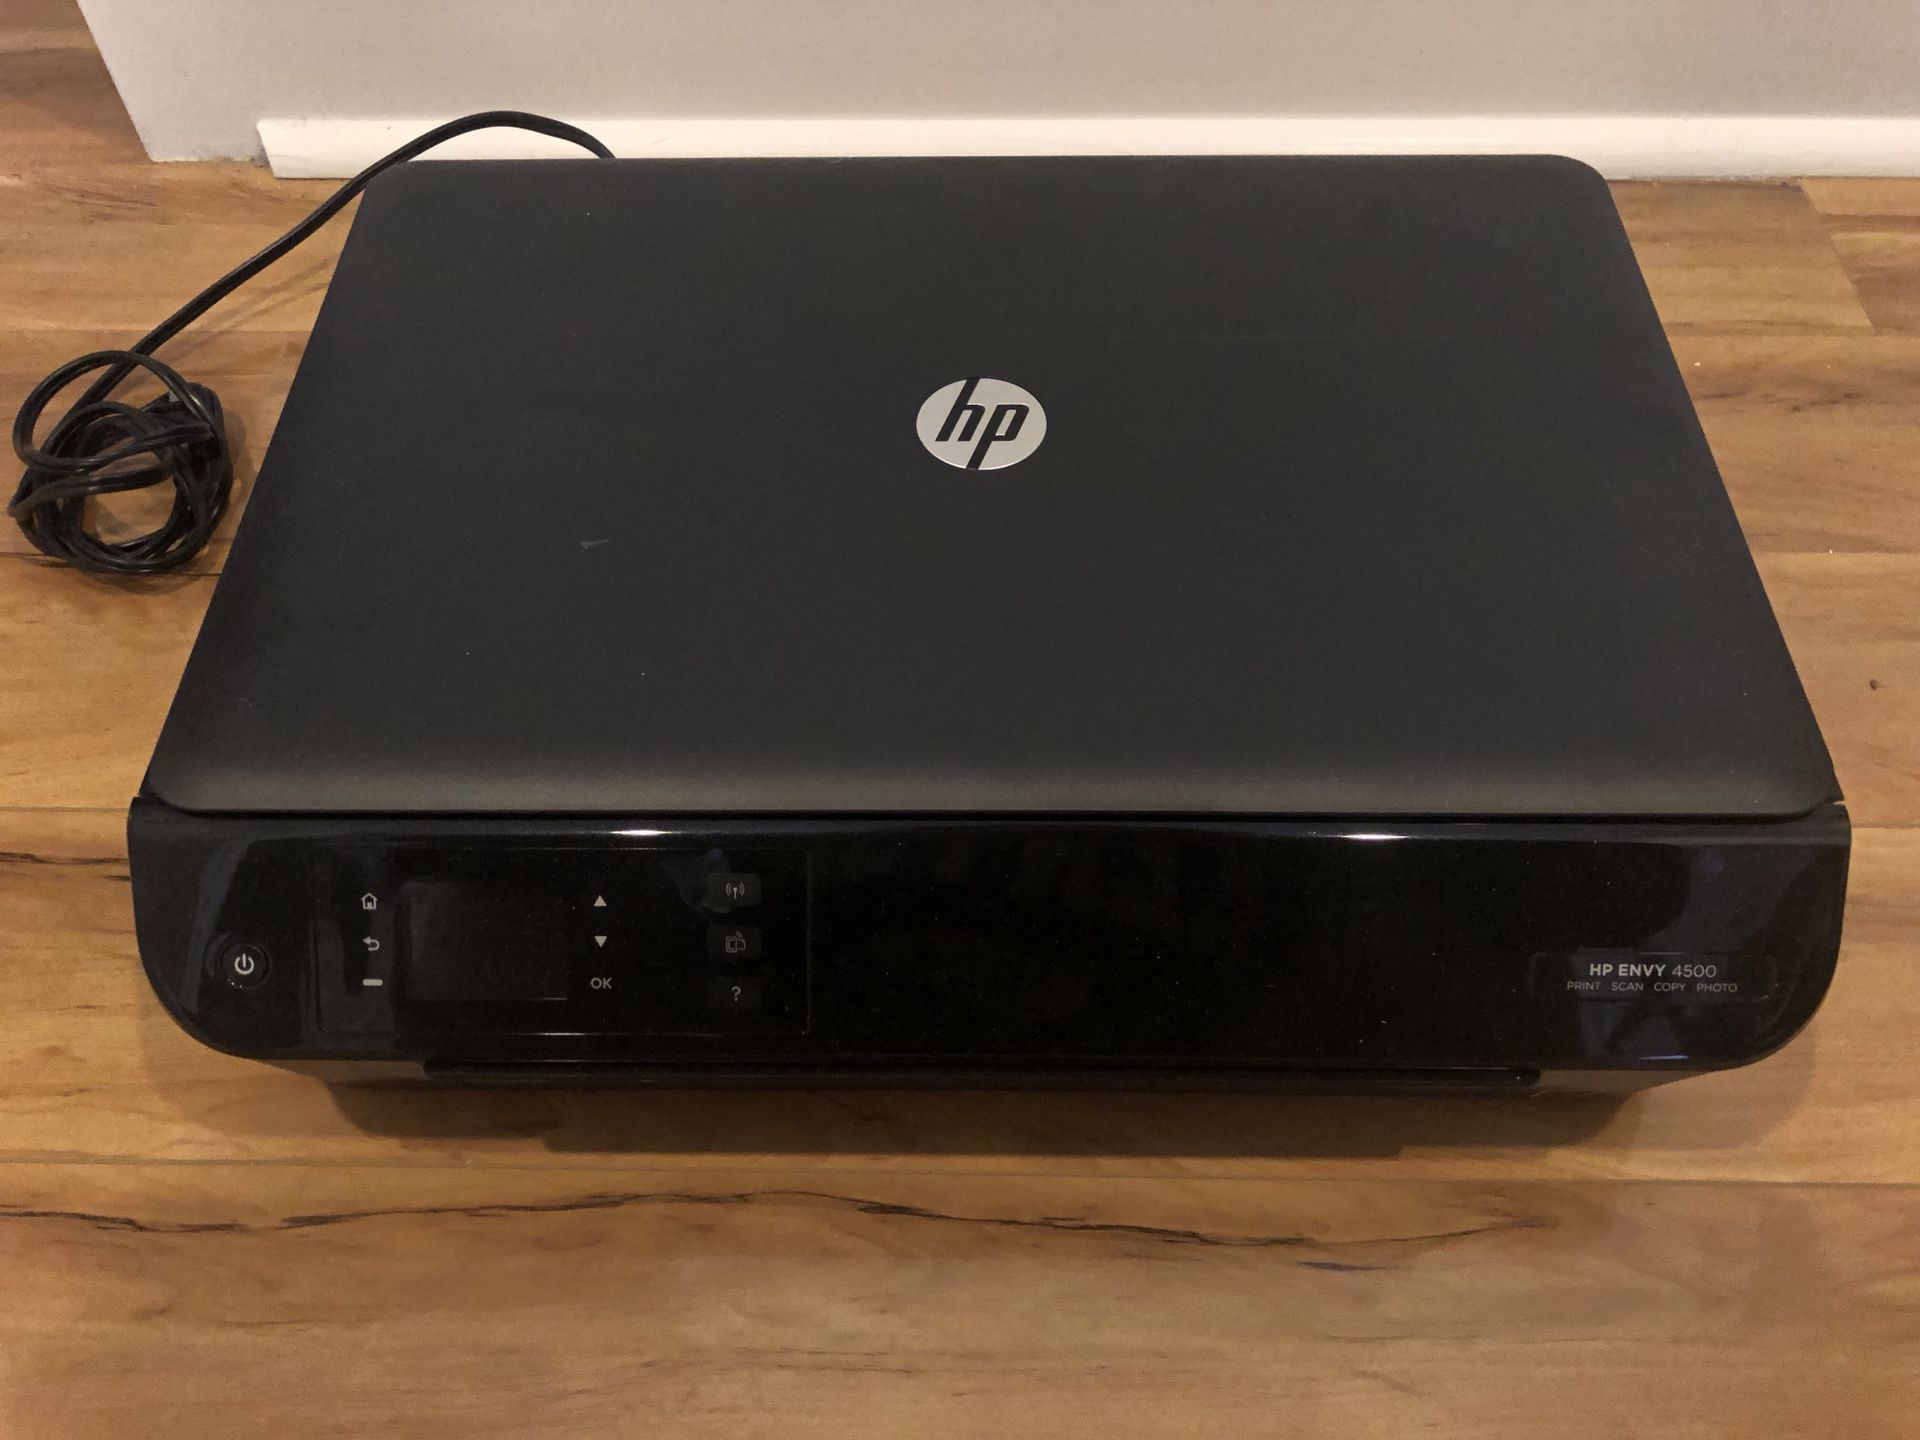 HP Envy 4500 wireless All-in-1! printer scanner copier